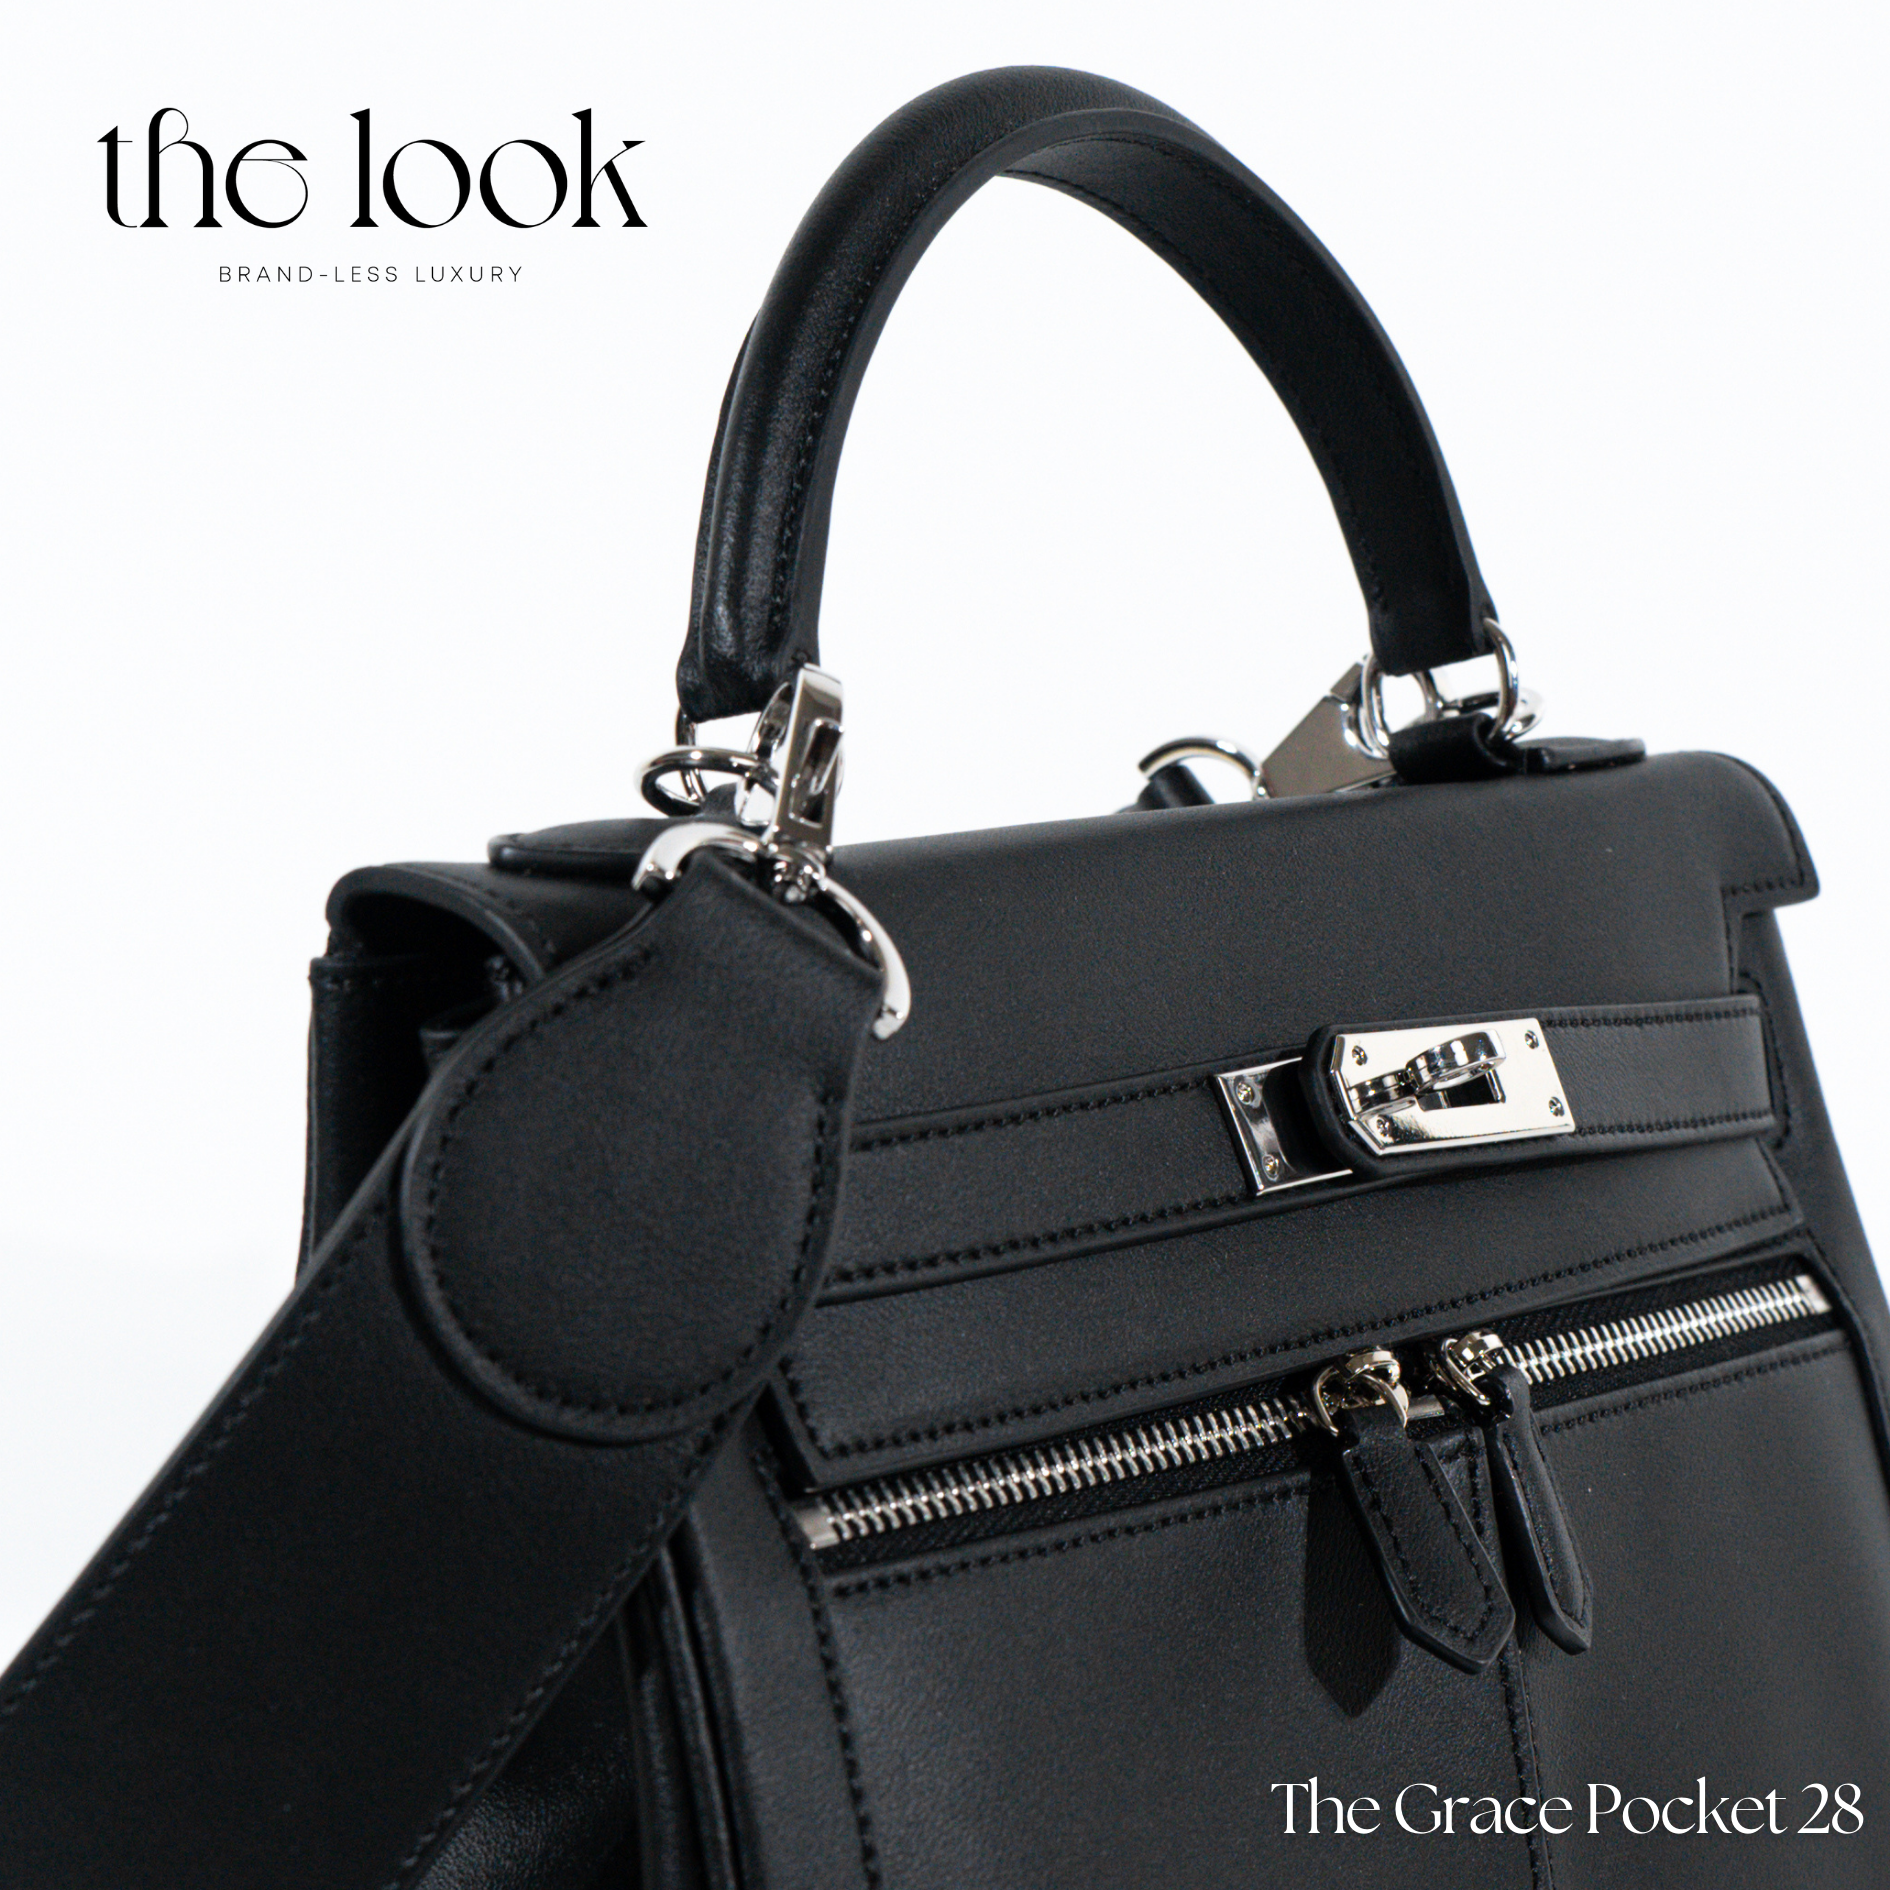 The Grace 28 Pocket Swift Leather in Noir SHW by The Look